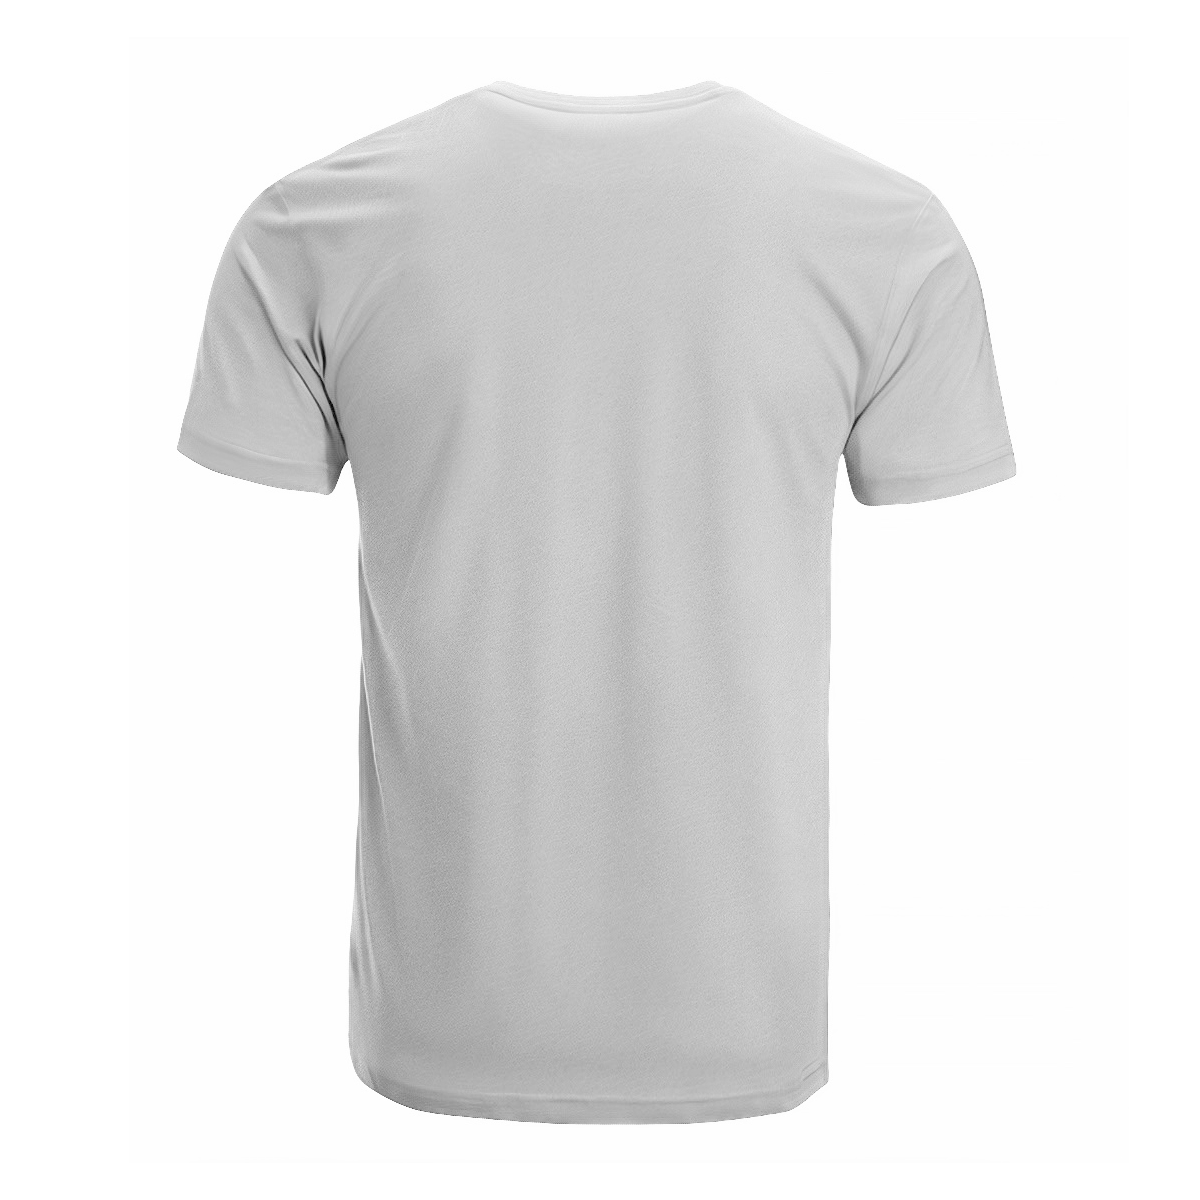 Wardlaw Tartan Crest T-shirt - I'm not yelling style